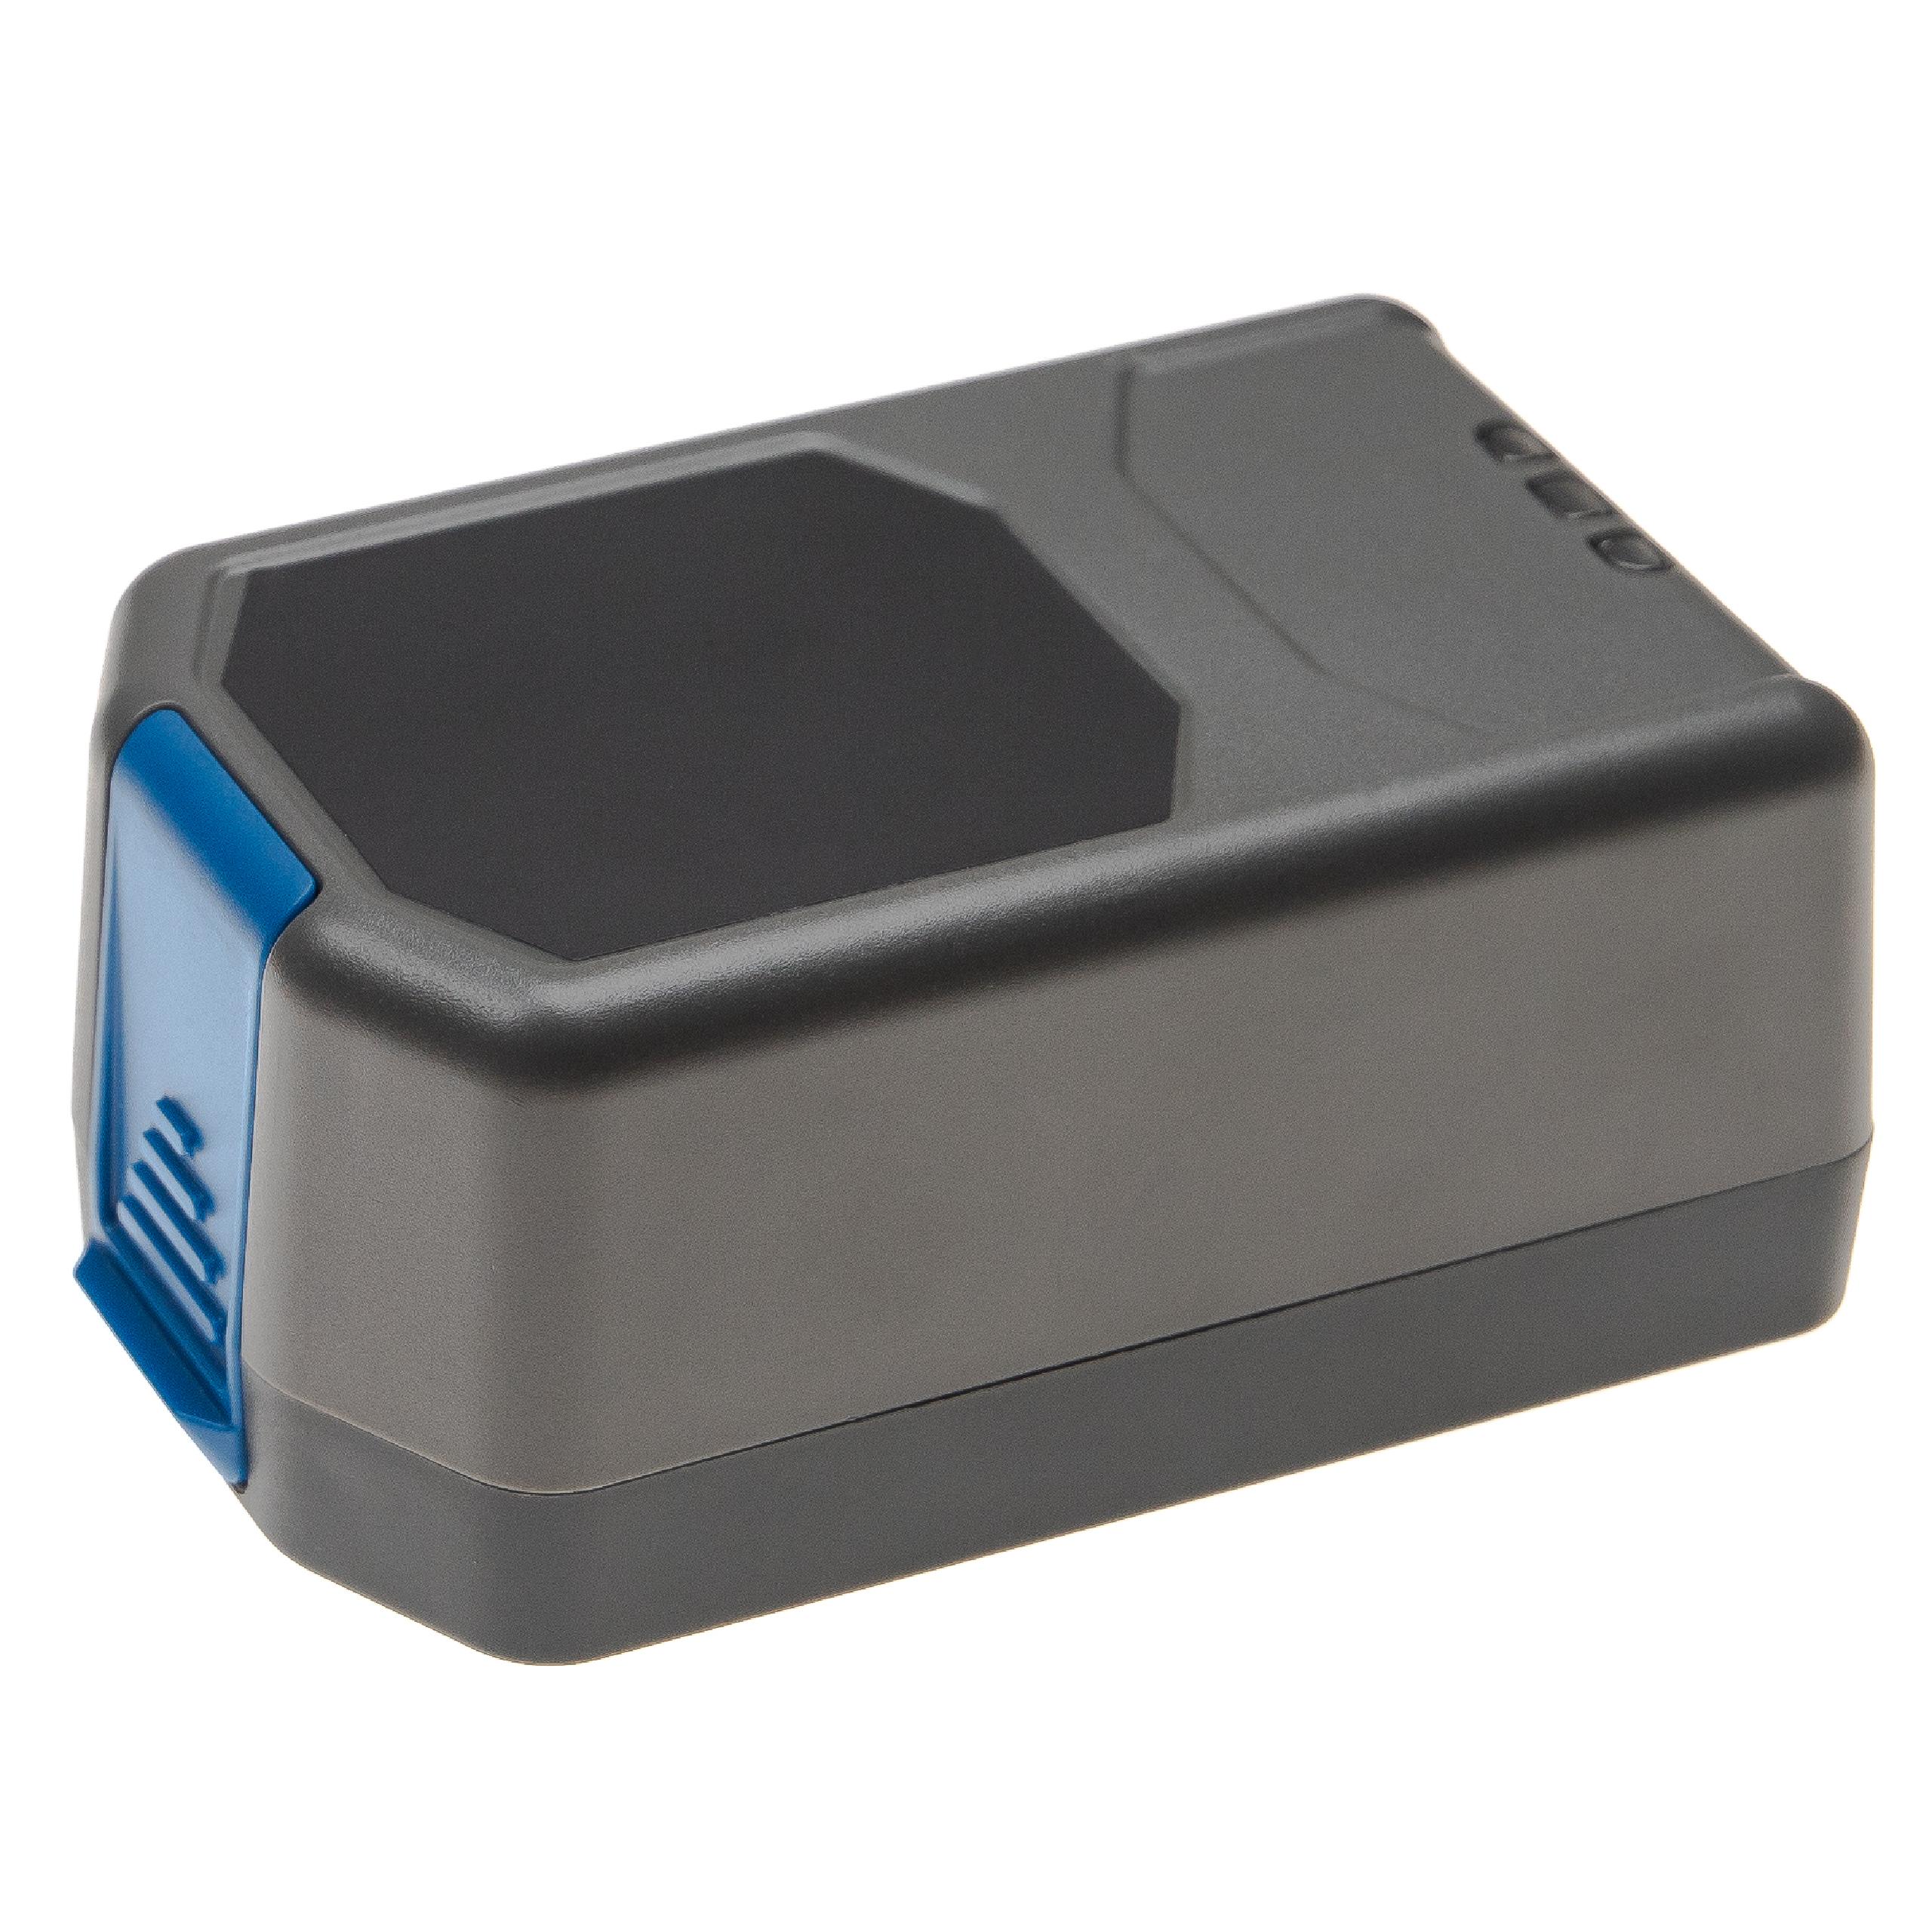 Batteria sostituisce Hoover 440005973, 440005966 per aspirapolvere Hoover - 6000mAh 20V Li-Ion grigio / blu